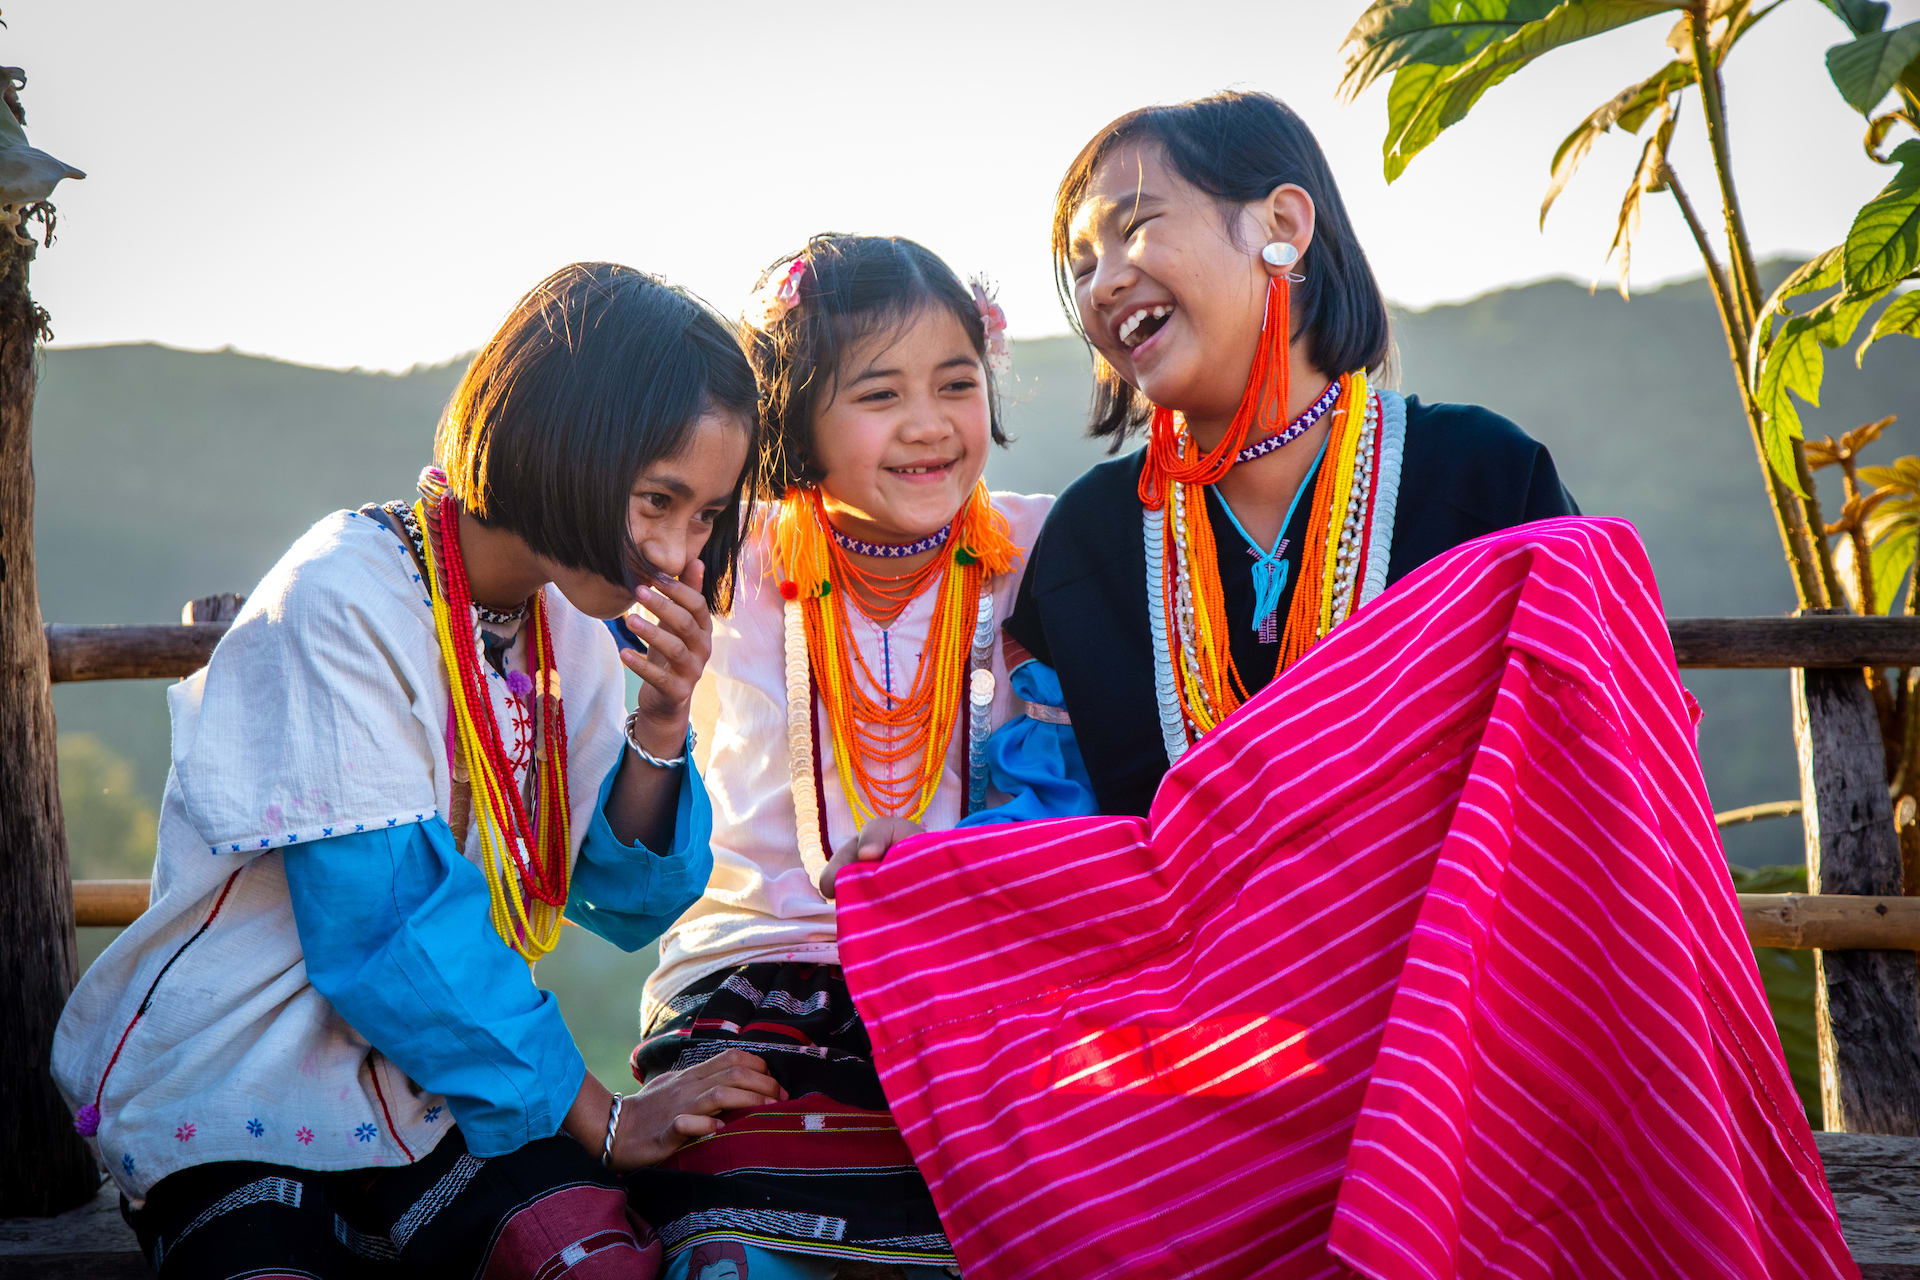 Three Thai girls sit together giggling.